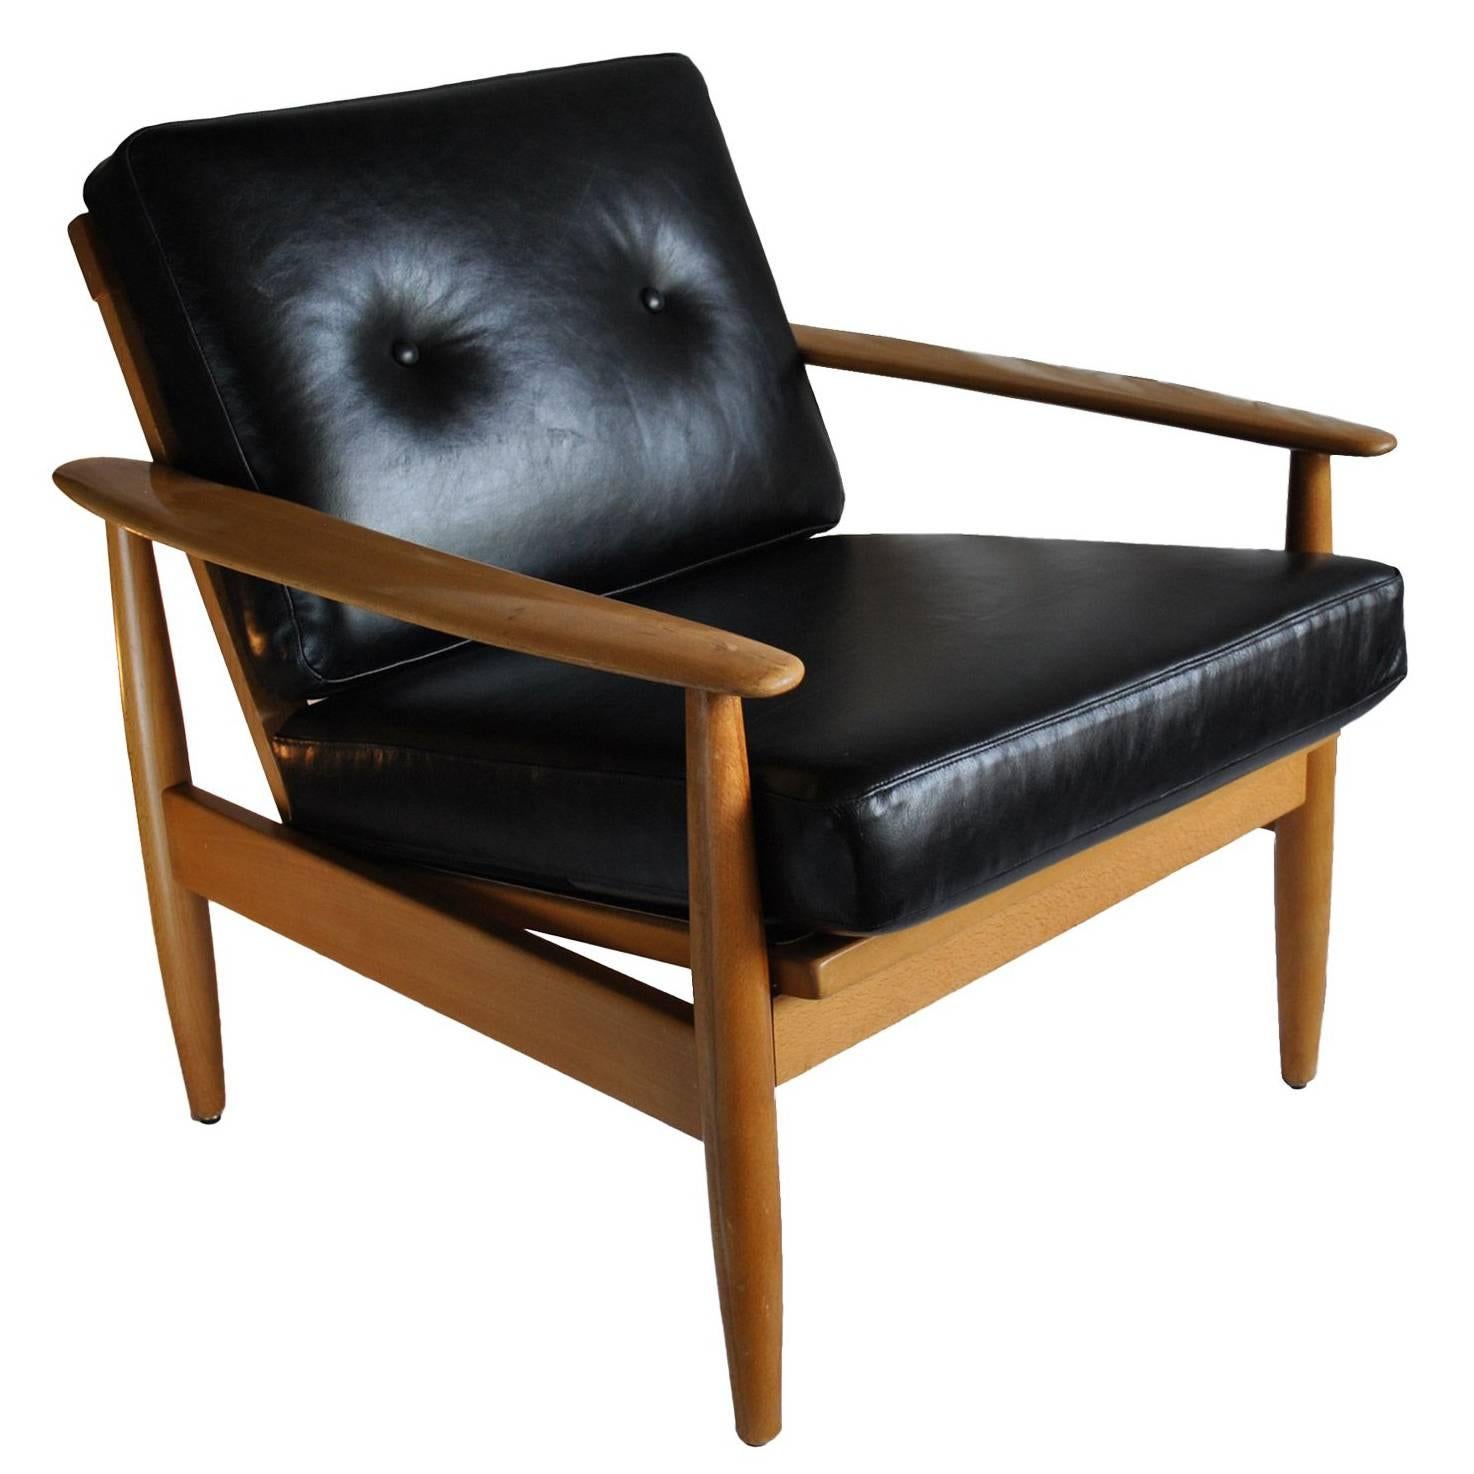 Danish Midcentury Armchair in New Italian Leather Upholstery